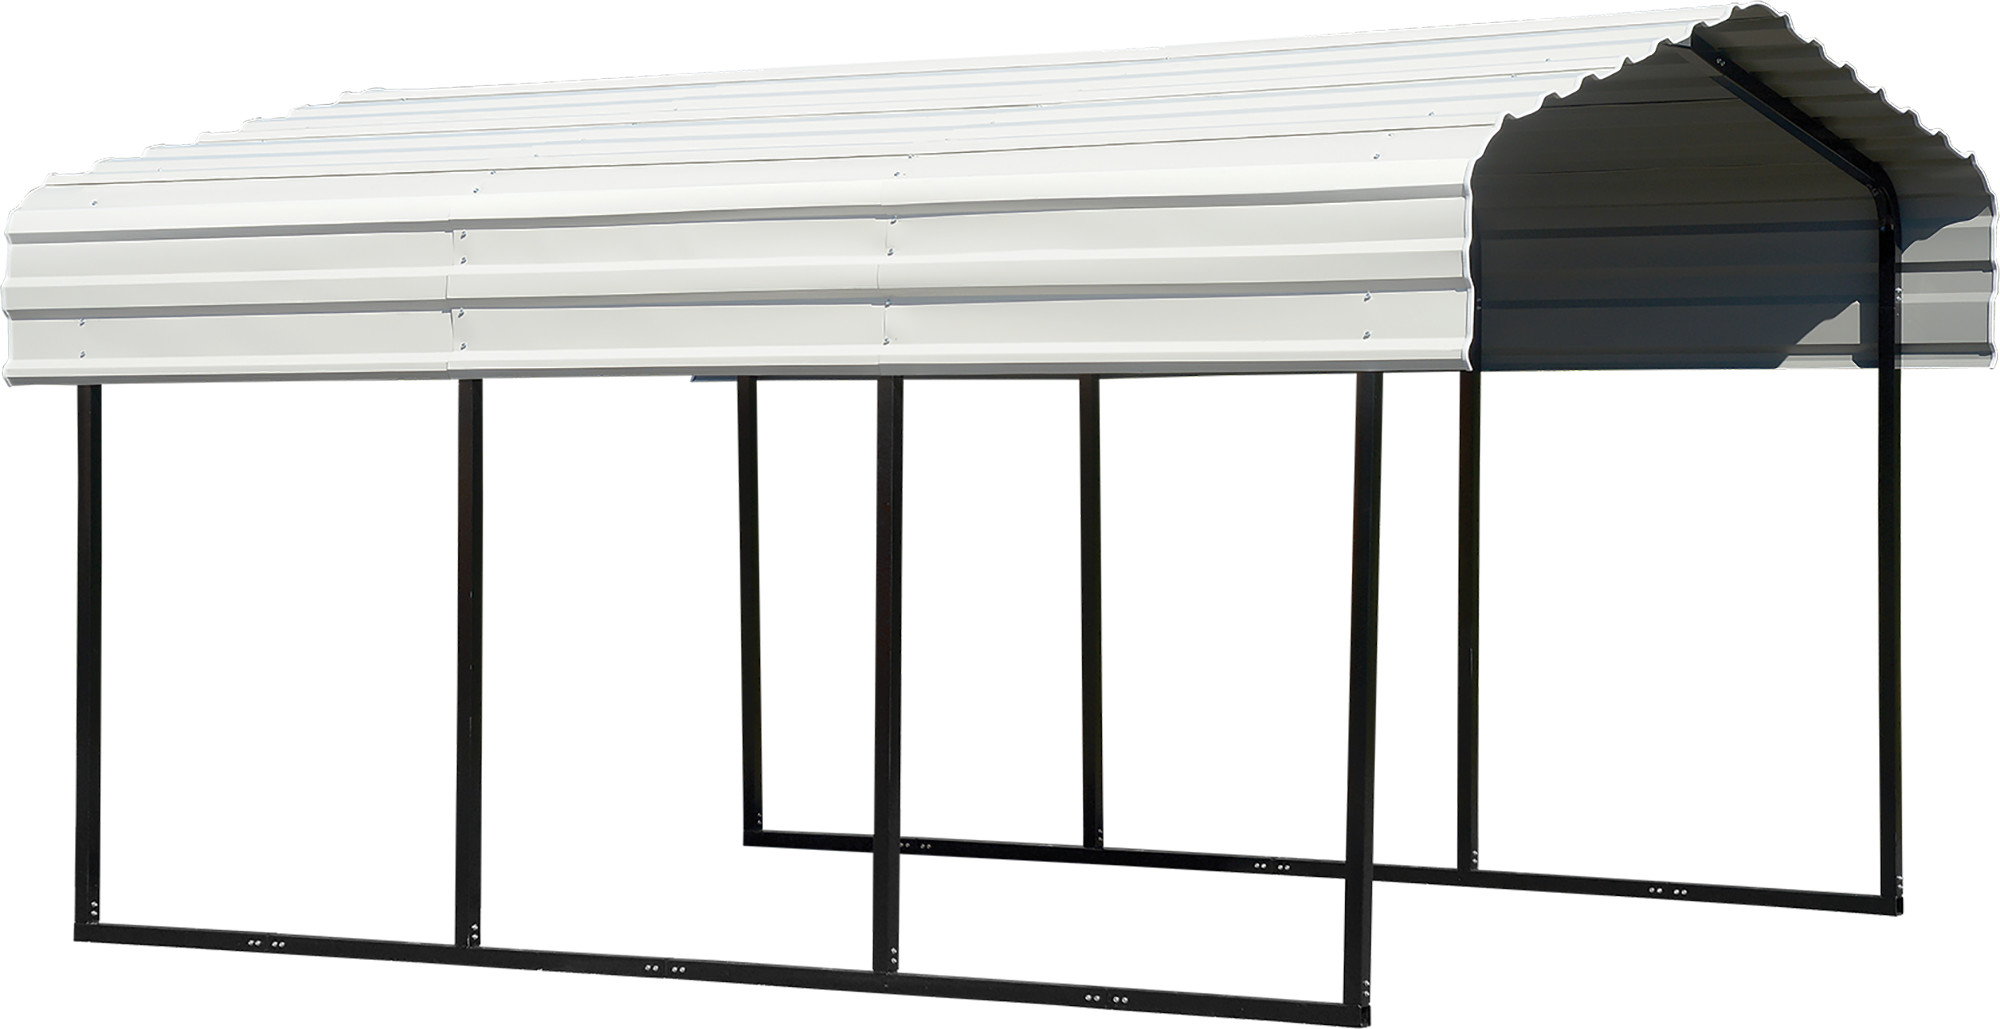 Arrow Galvanized Steel Carport, 10 x 15 x 7 ft, Black/Eggshell - image 3 of 17